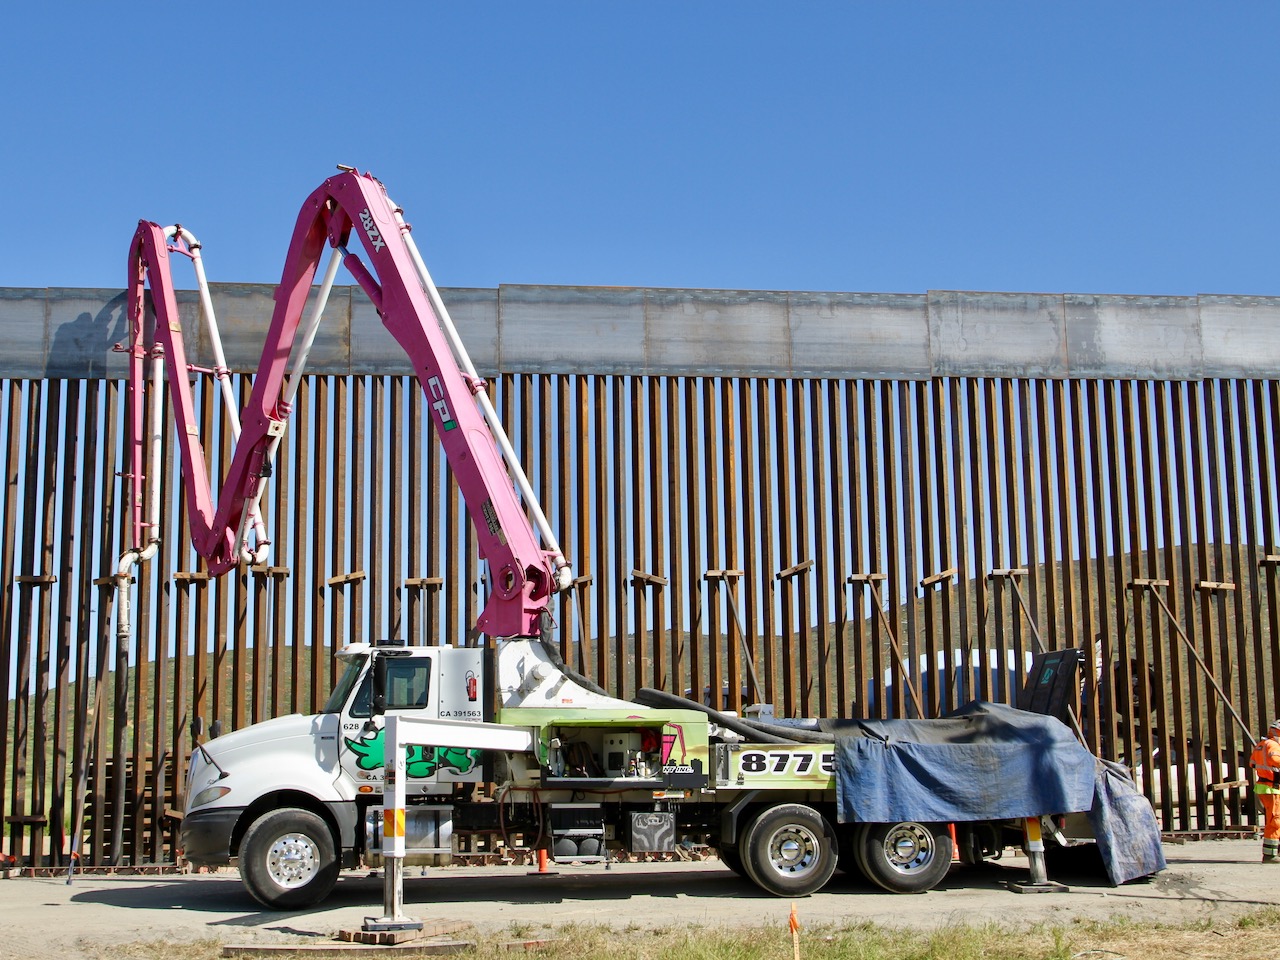 Cronkite News: President Trump declares 'big victory' on border wall